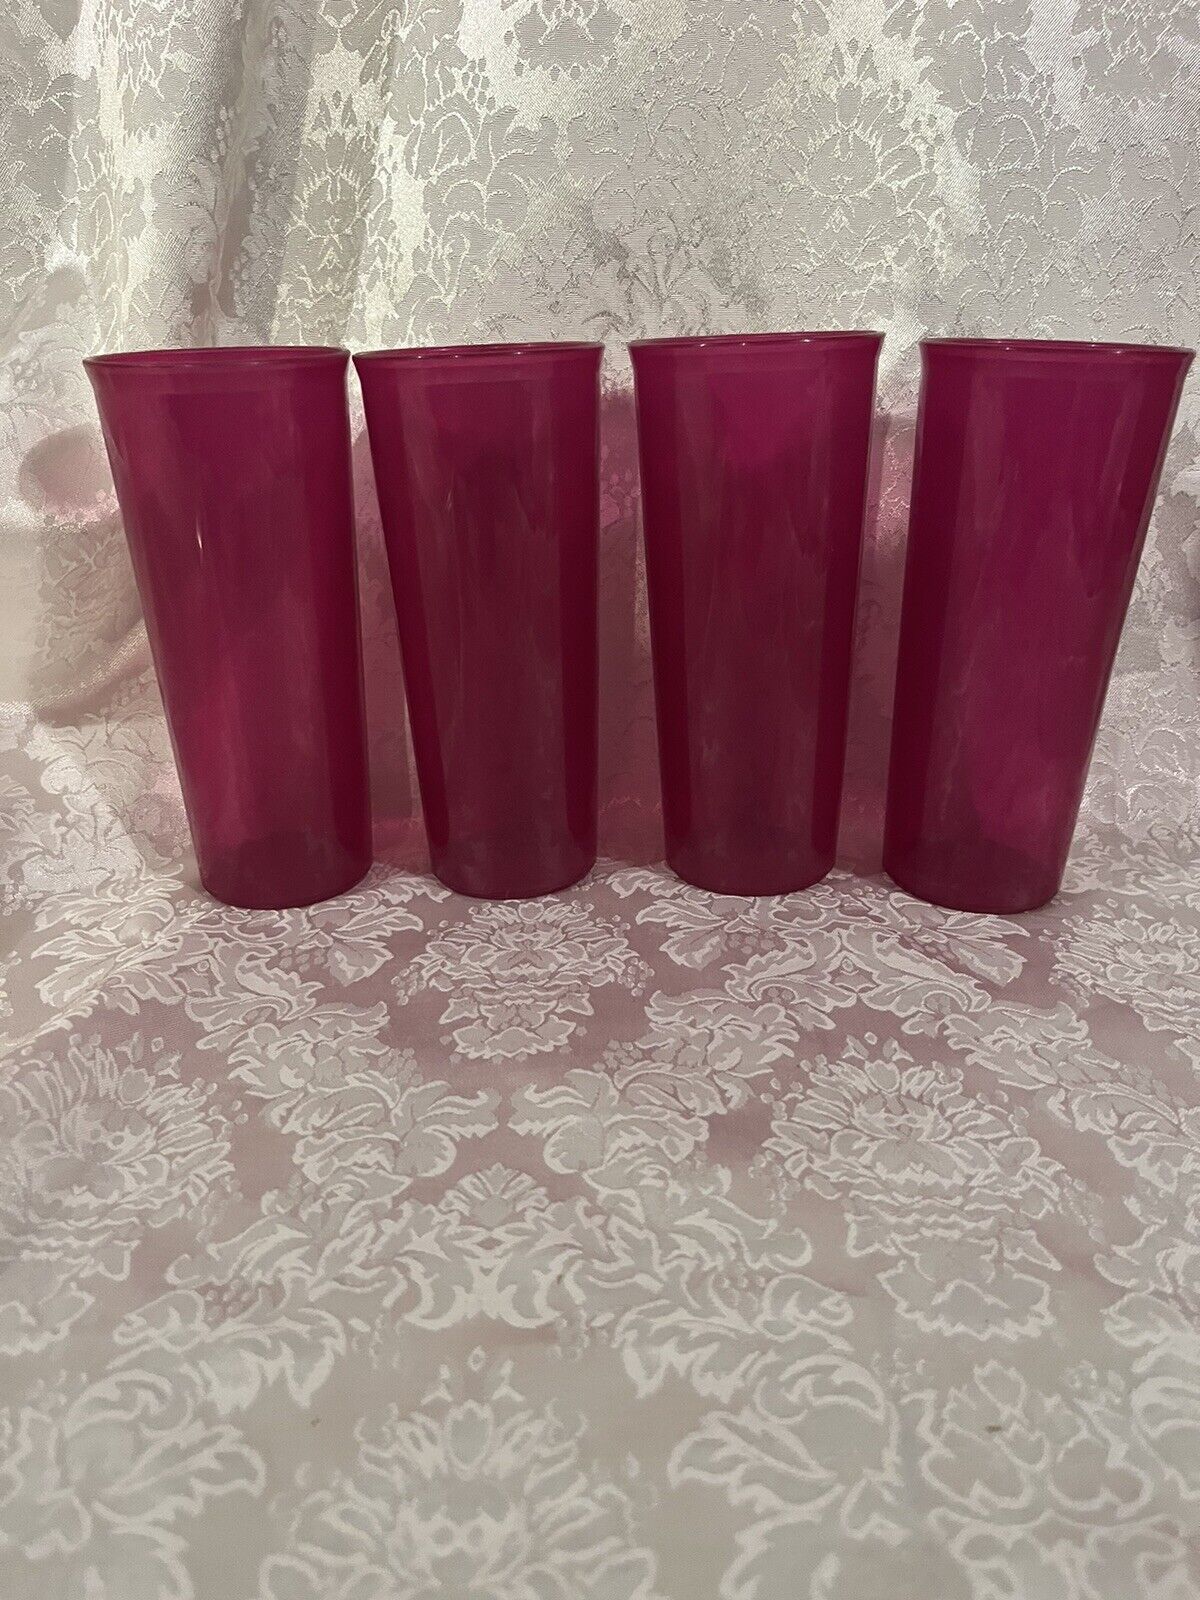 Tupperware Set Of 4 16 Oz Straight Sided Tumblers Cups Purple / Fuchsia BrandNew